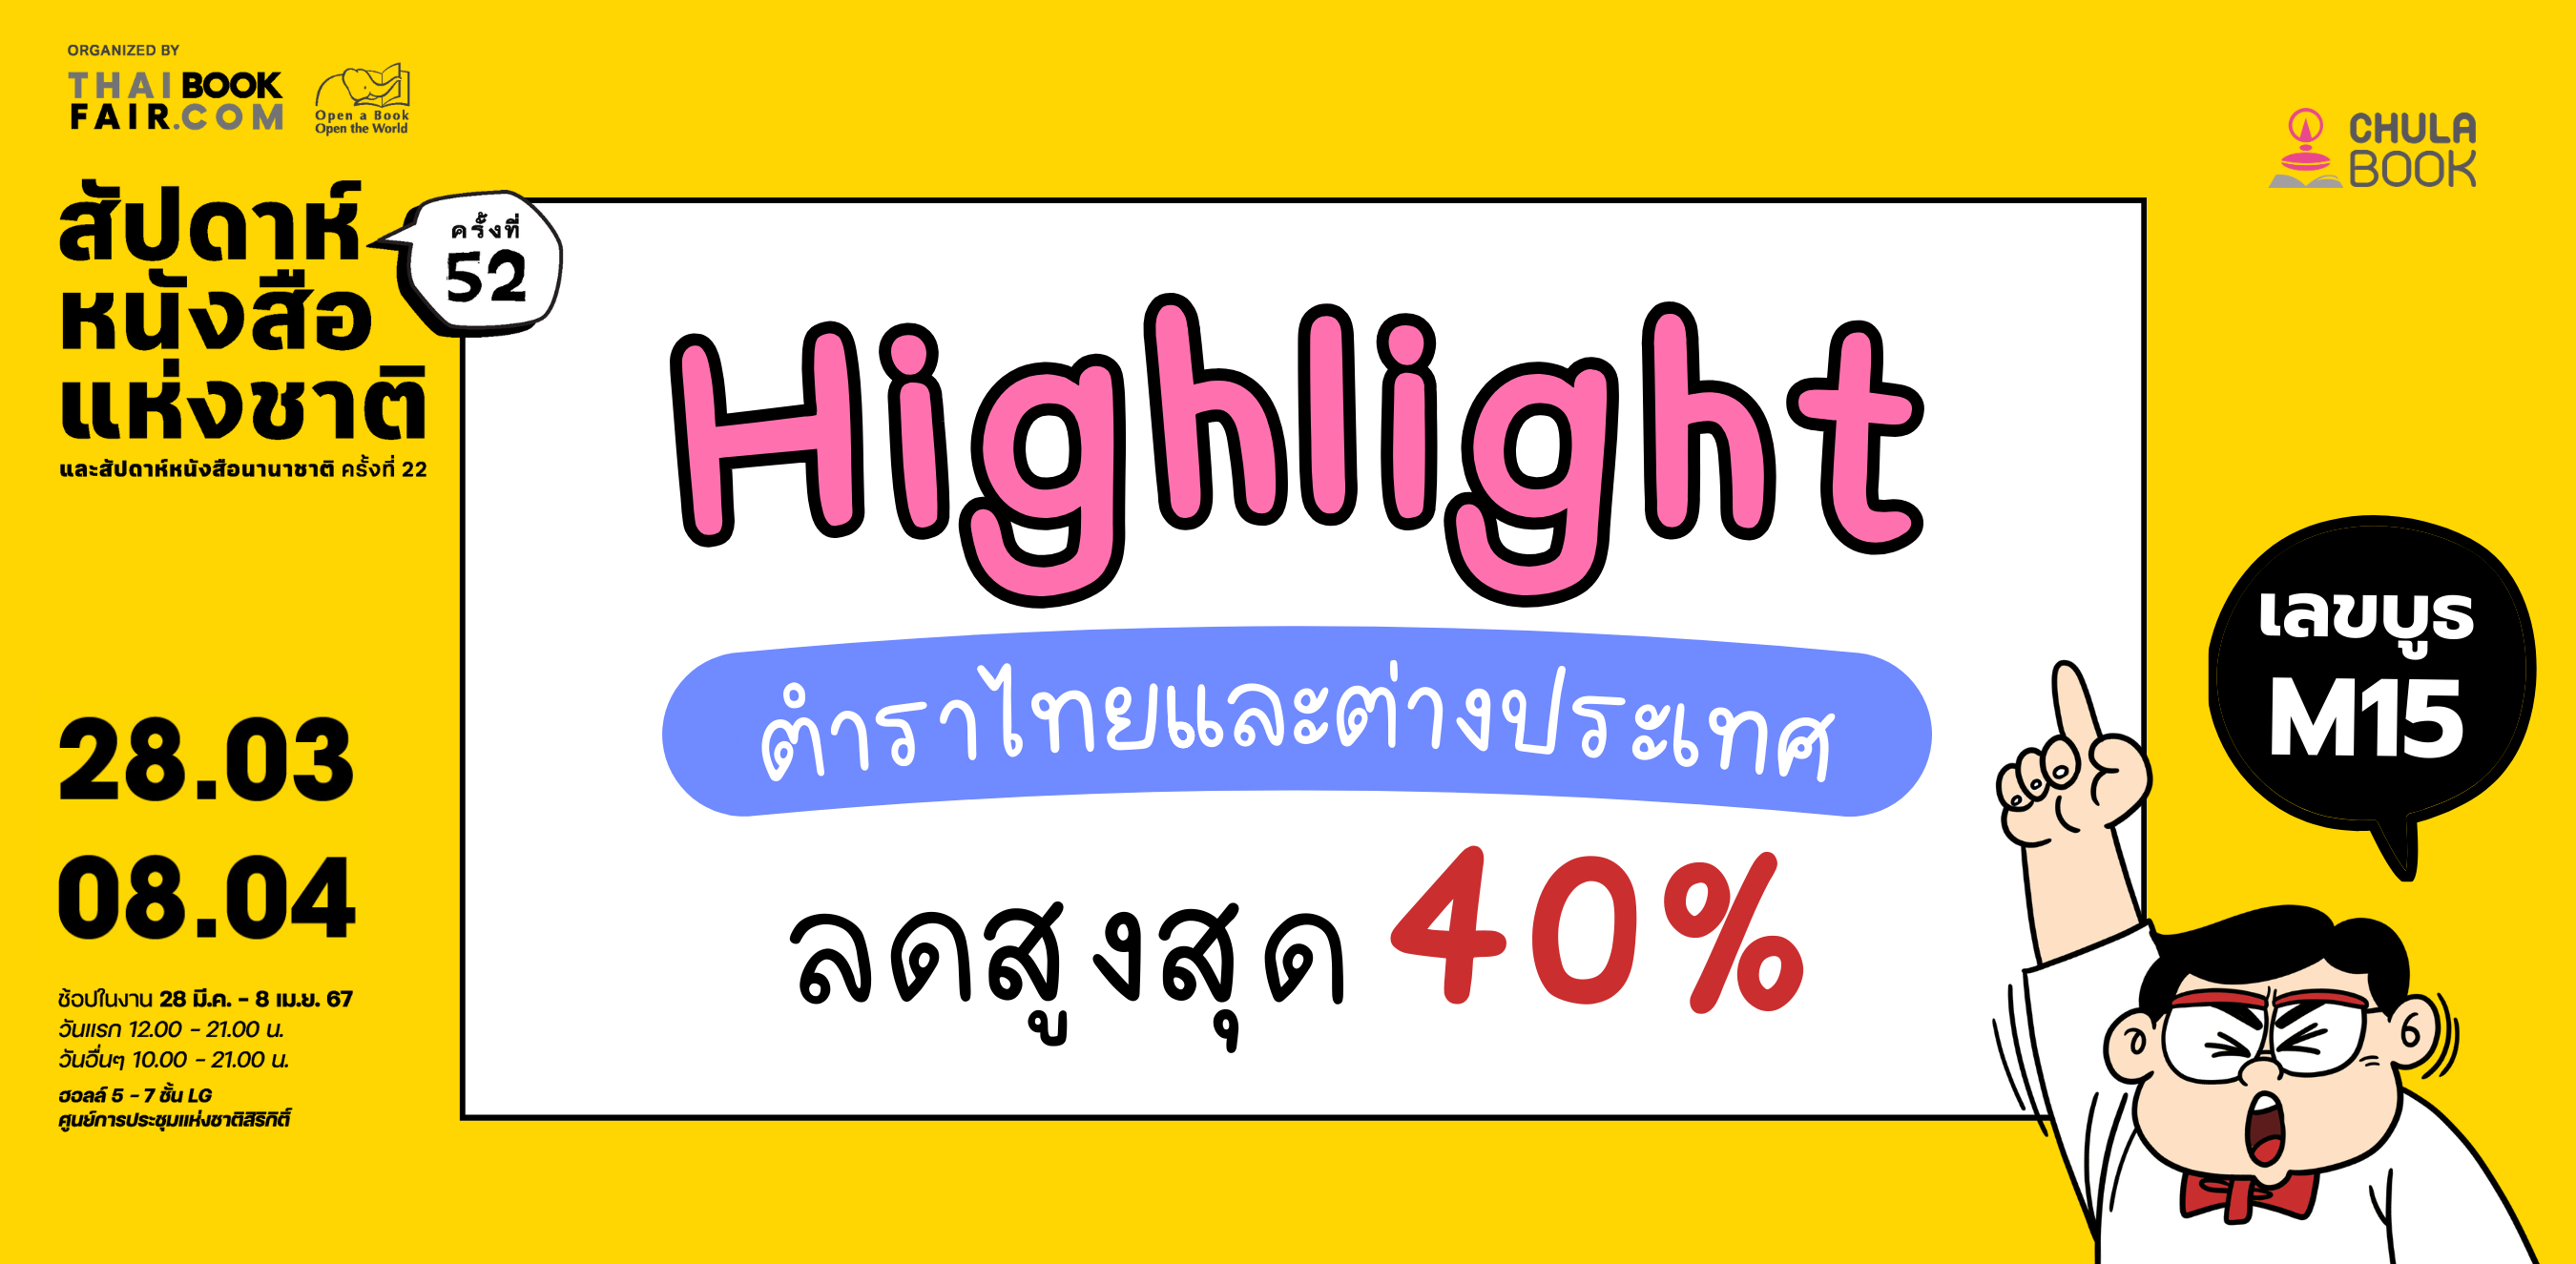 Highlight ตำราไทยและต่างประเทศ ลดสูงสุด 40%